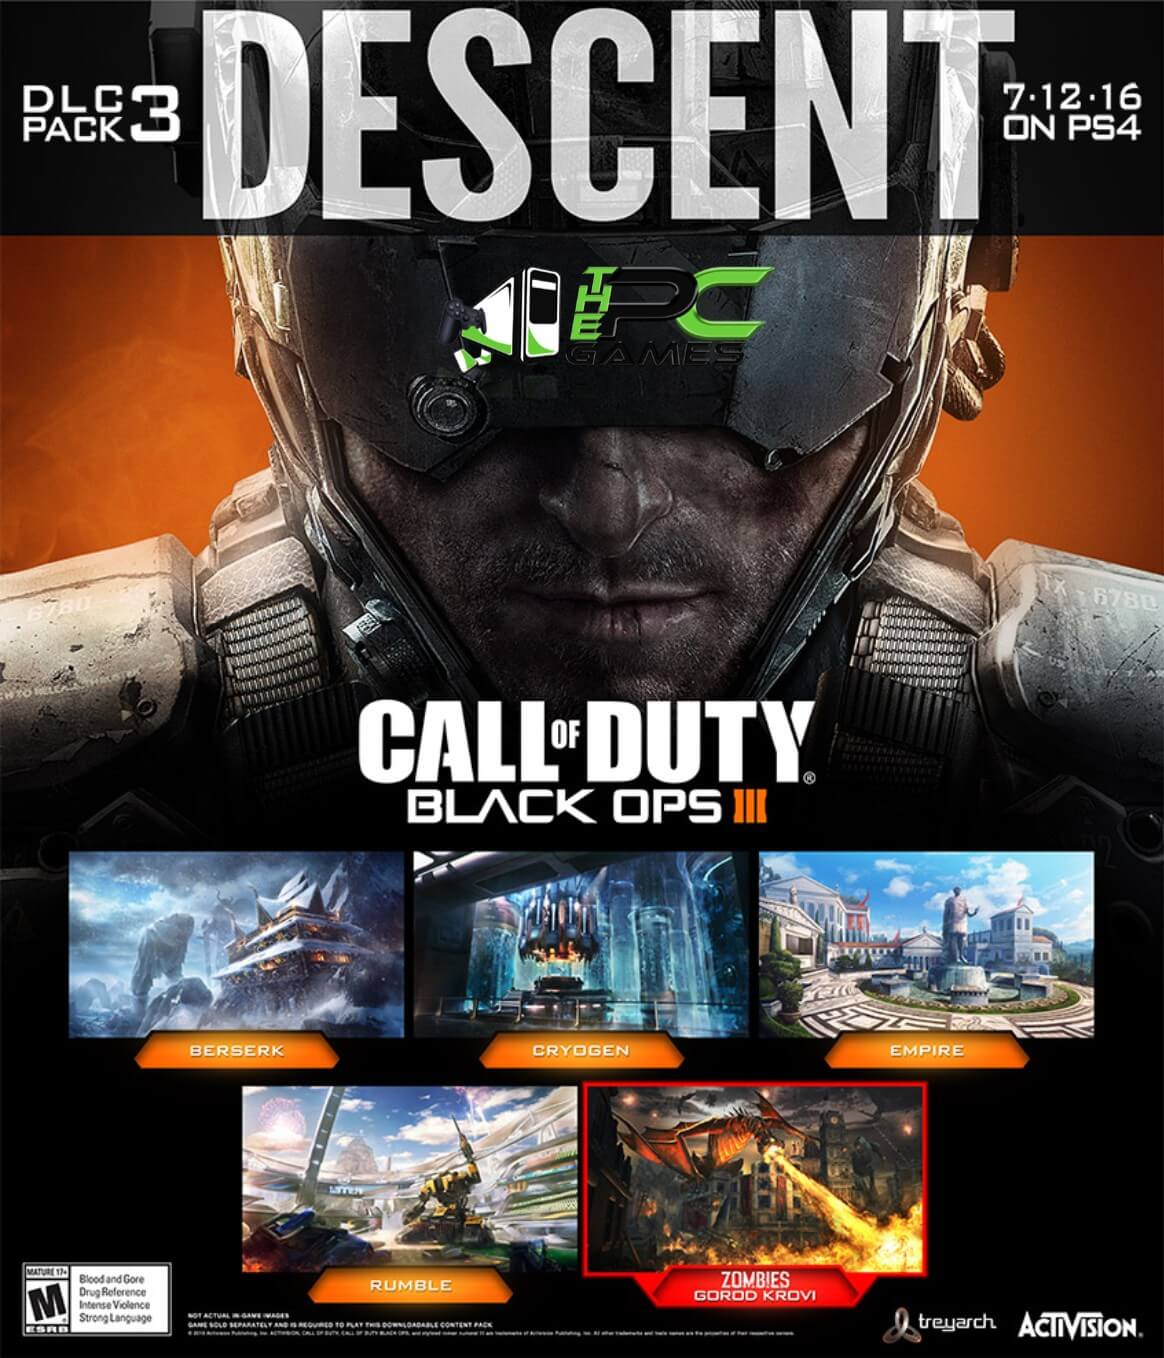 Call Of Duty Black Ops III Descent DLC